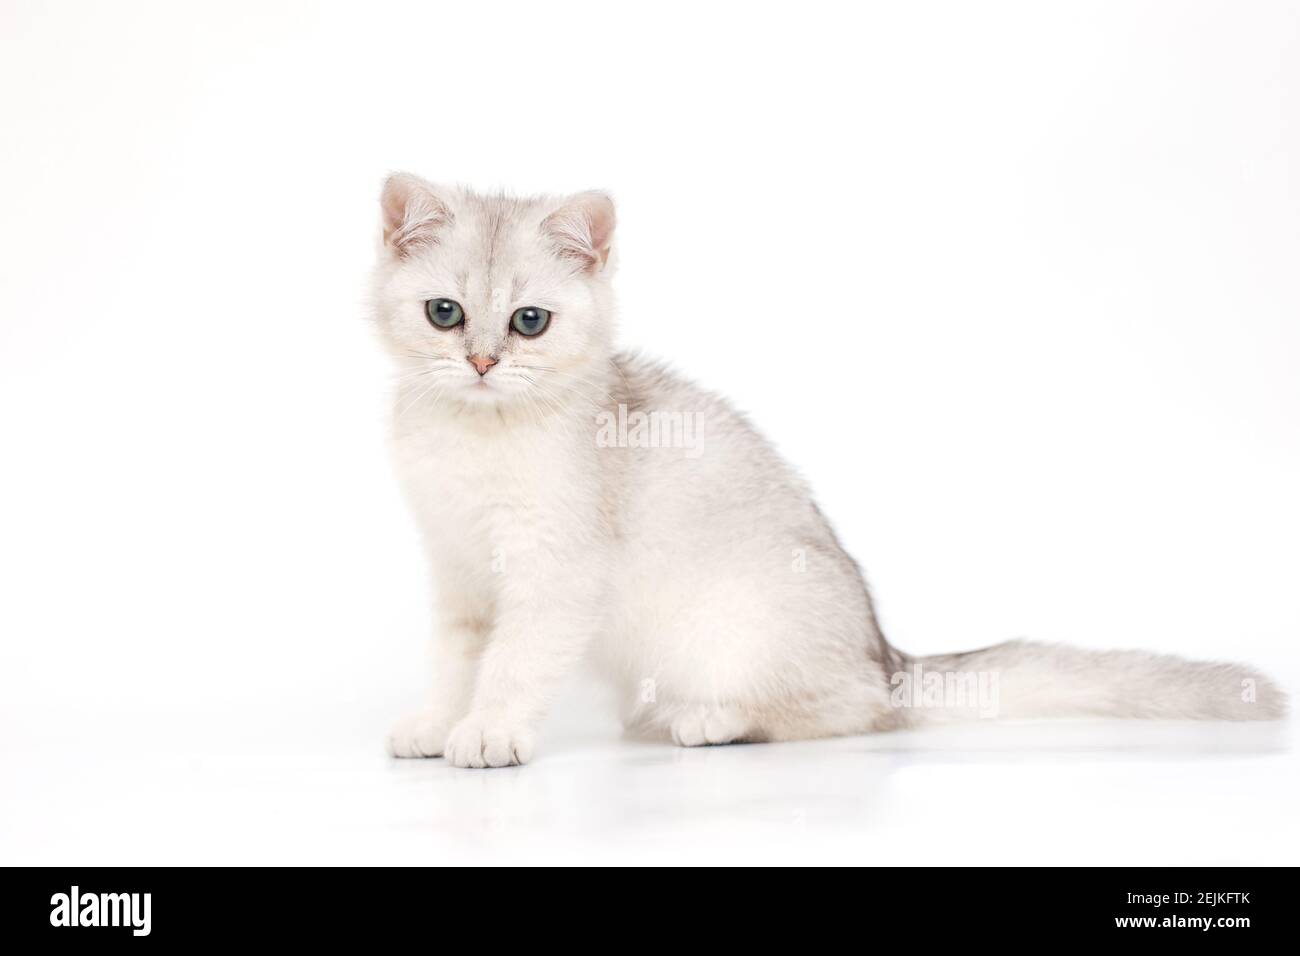 White beautiful kitten of British breed sits on a white background. Stock Photo